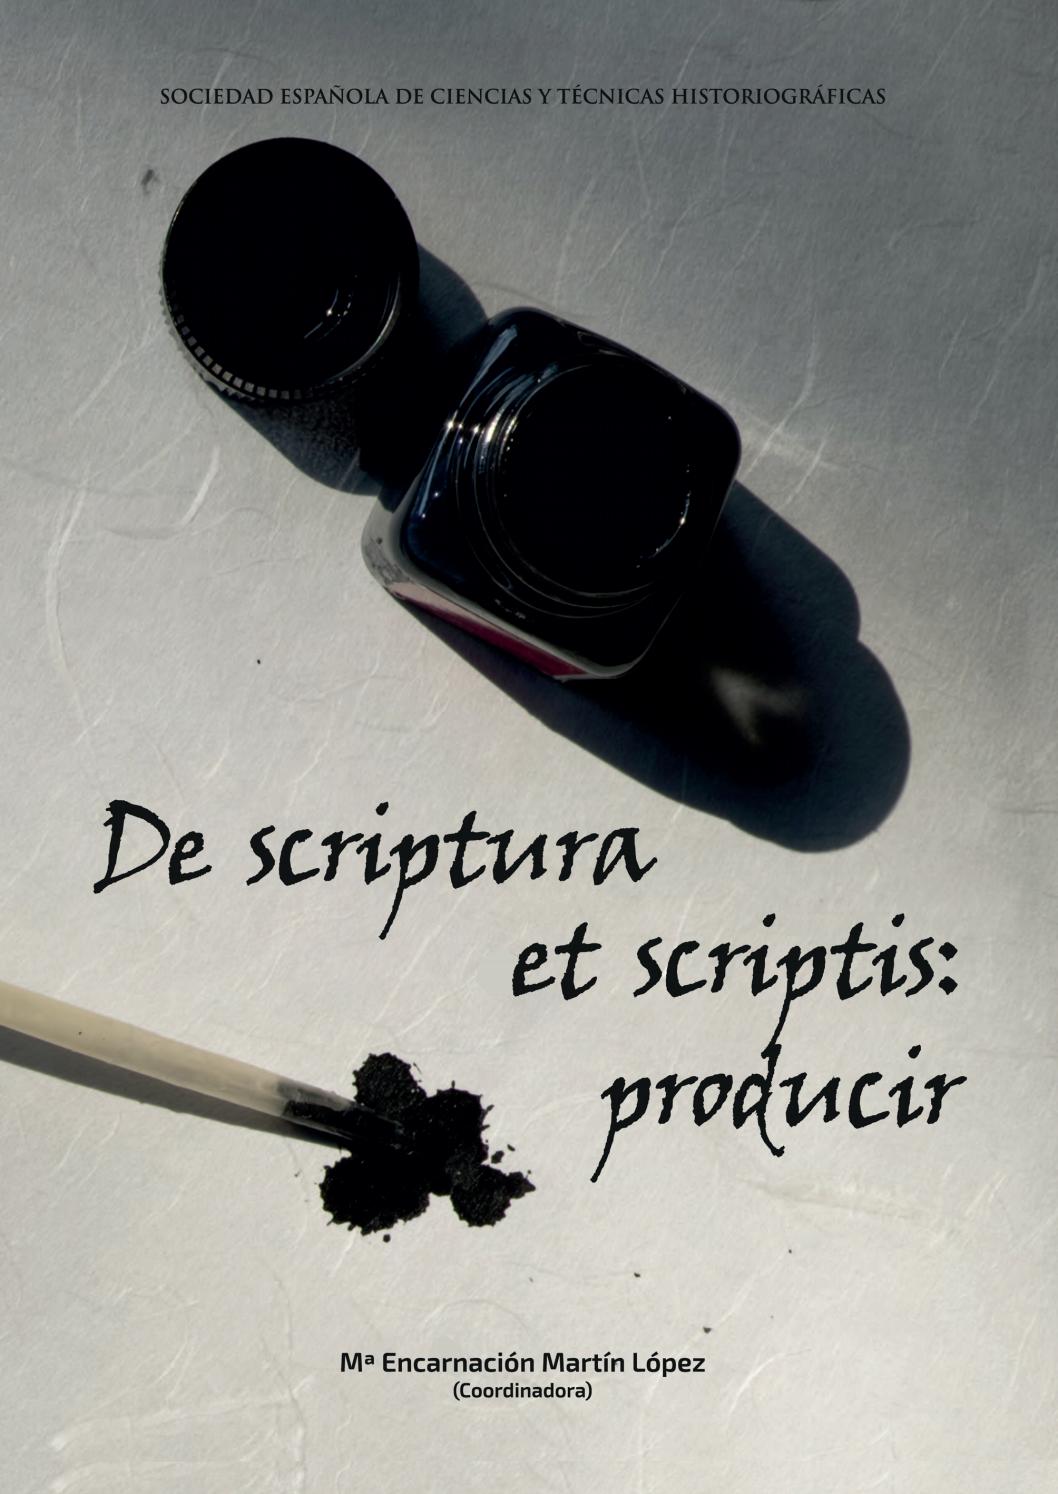 Imagen de portada del libro De scriptura et scriptis